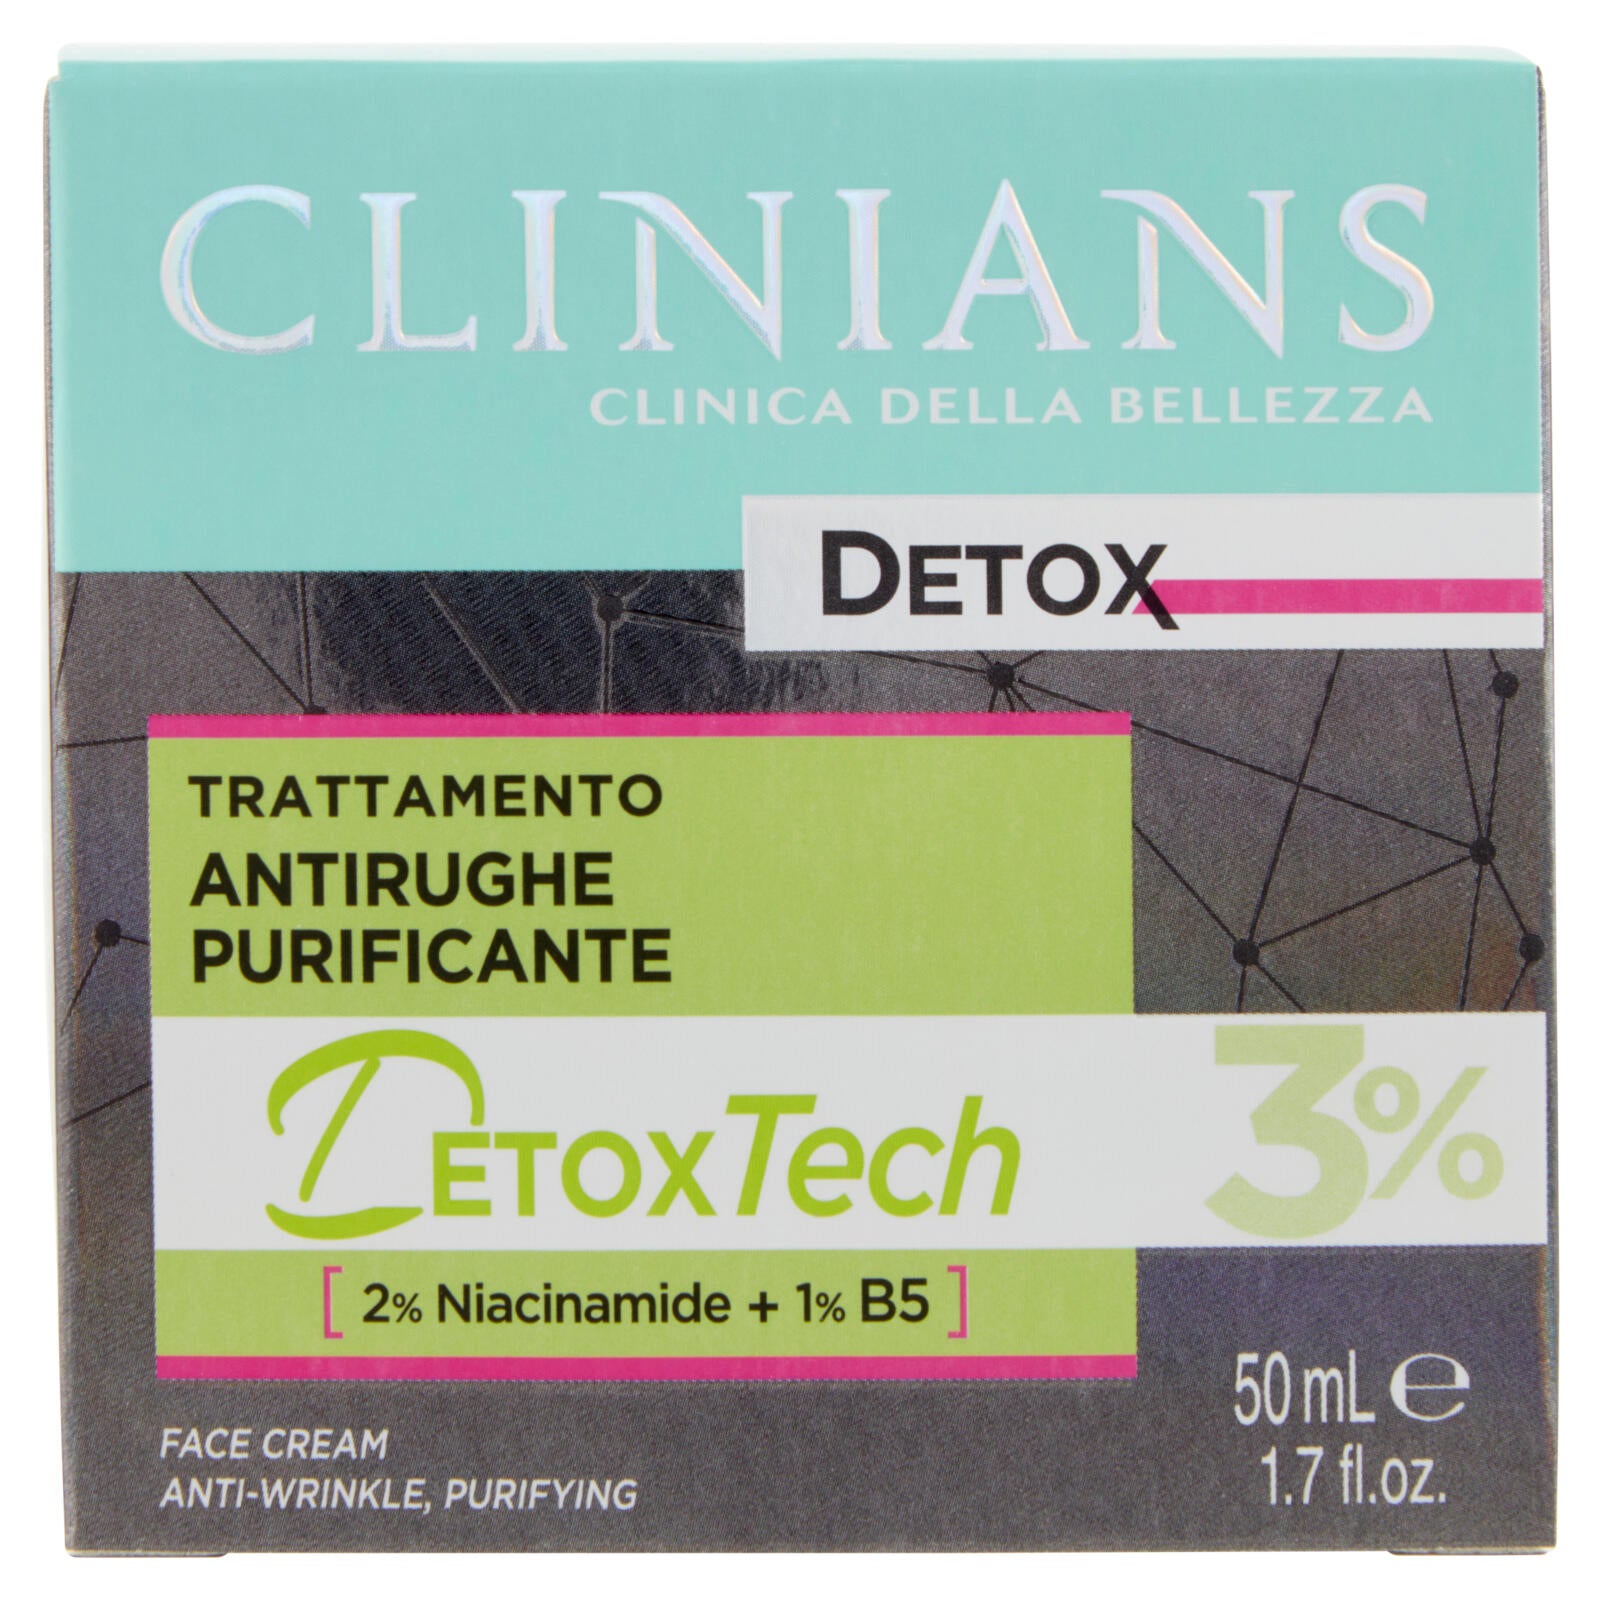 Clinians Detox Trattamento Antirughe Purificante DetoxTech 3% 50 mL